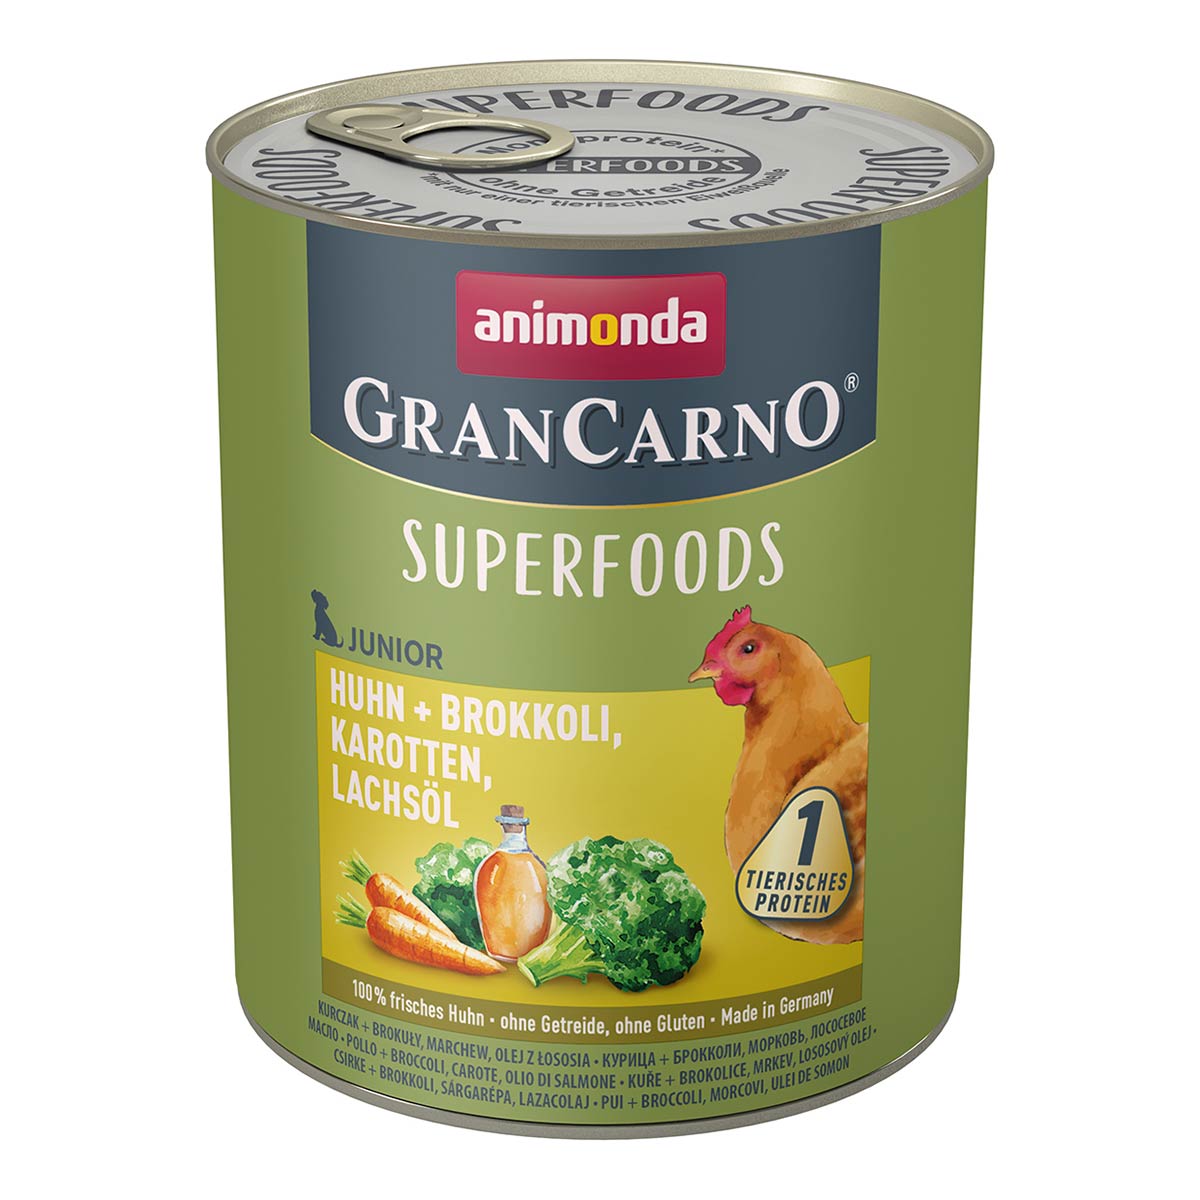 animonda GranCarno superfoods Junior Huhn + Brokkoli, Karotte, Lachsöl 24x800g von animonda GranCarno